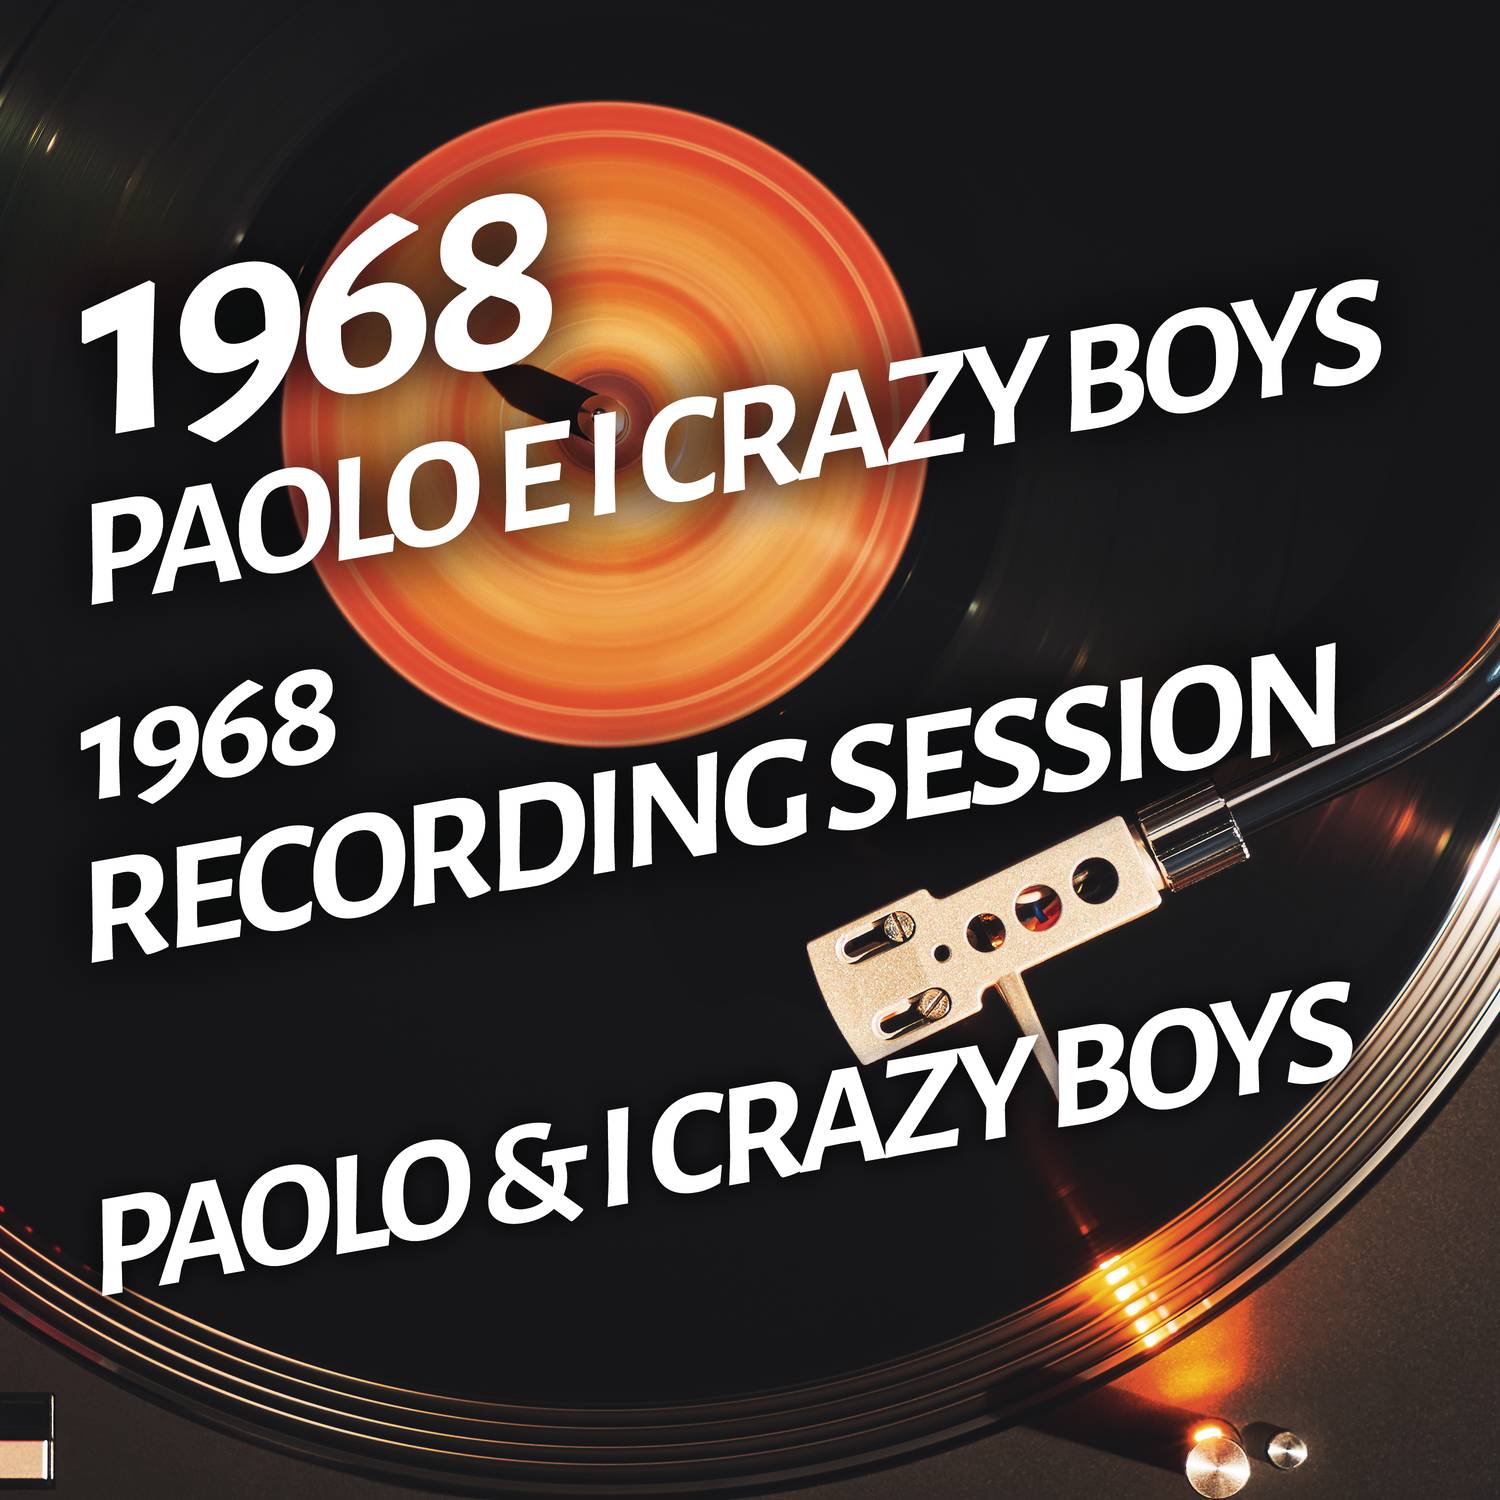 Paolo E i Crazy Boys - 1968 Recording Session